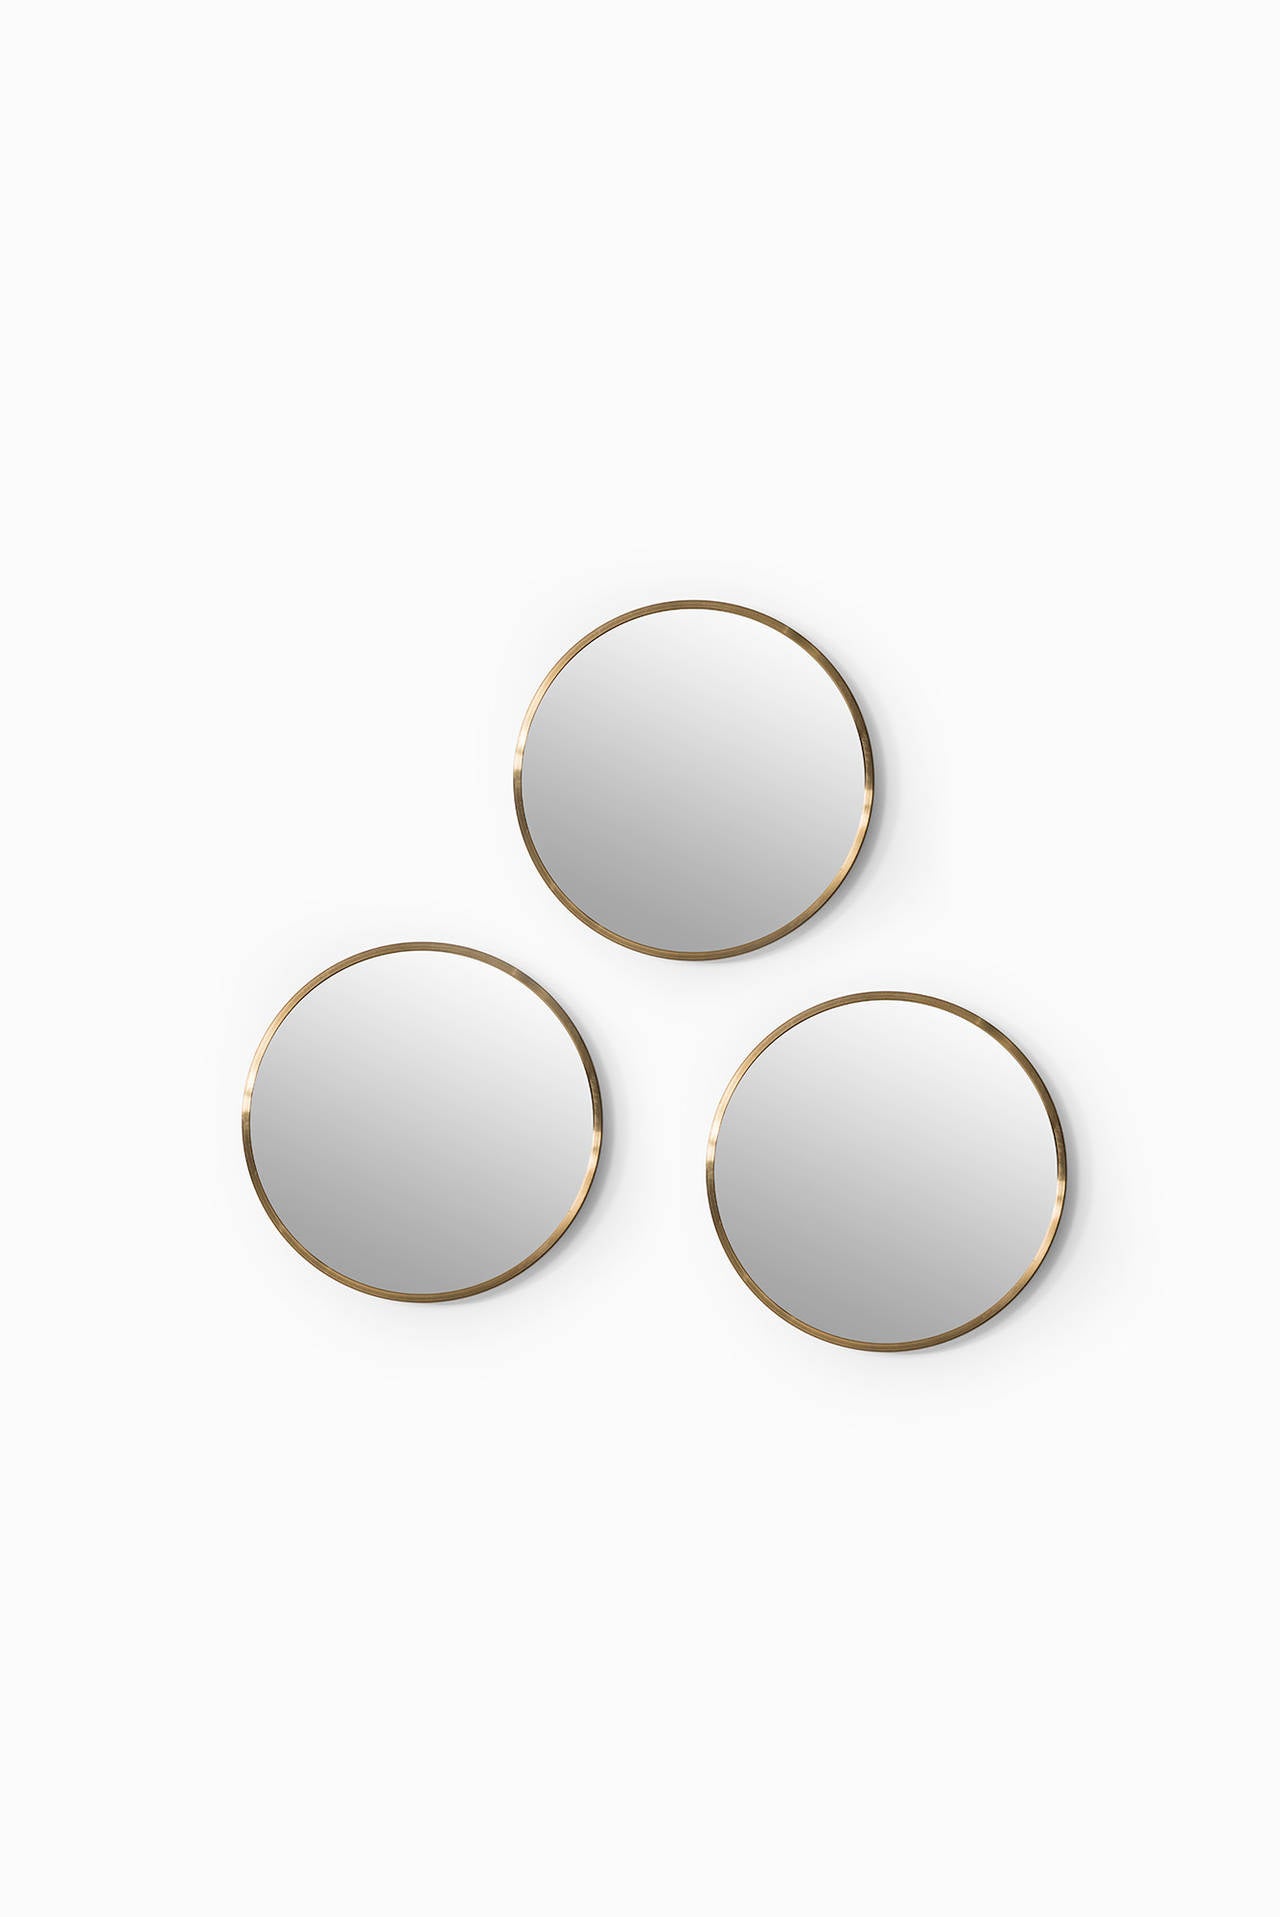 Swedish Set of Three Round Mirrors in Brass by Glasmäster in Sweden